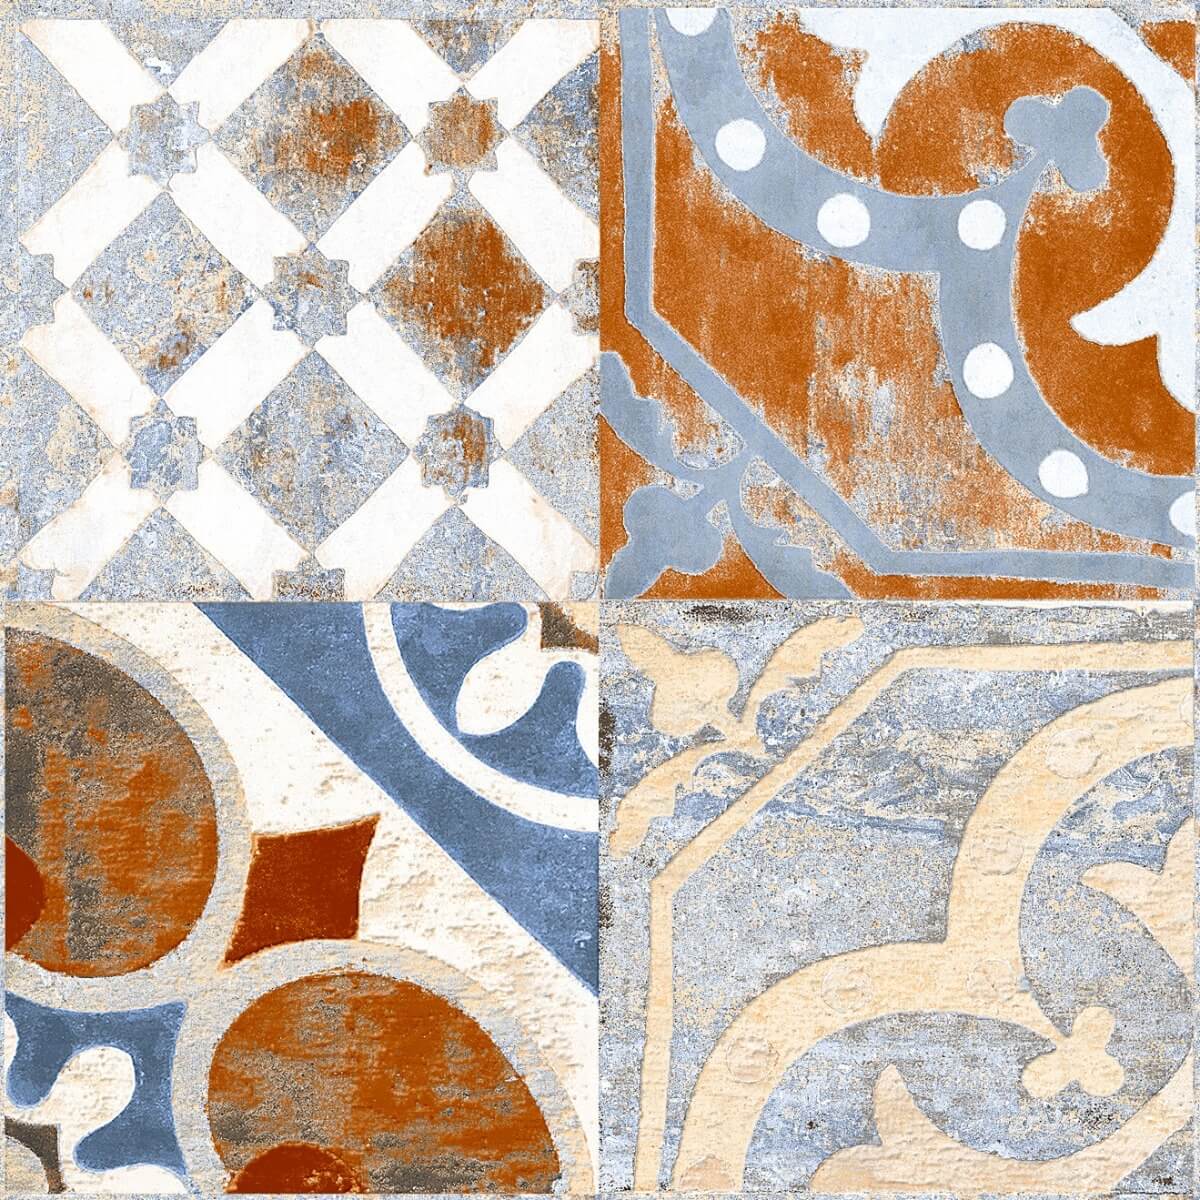 Beige Tiles for Accent Tiles, Dining Room Tiles, Hospital Tiles, Bar/Restaurant, Outdoor Area